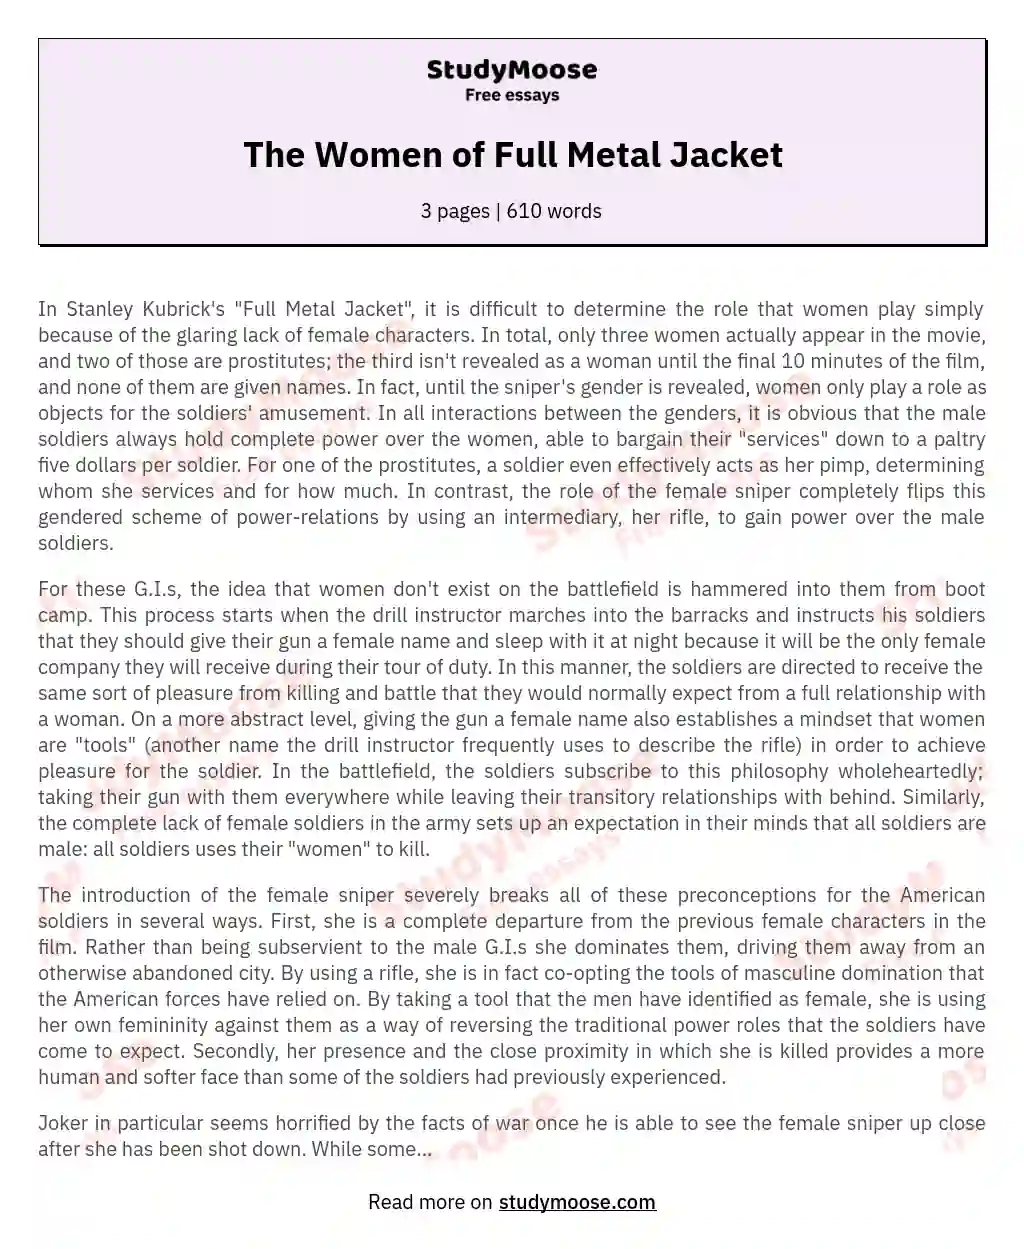 The Women of Full Metal Jacket